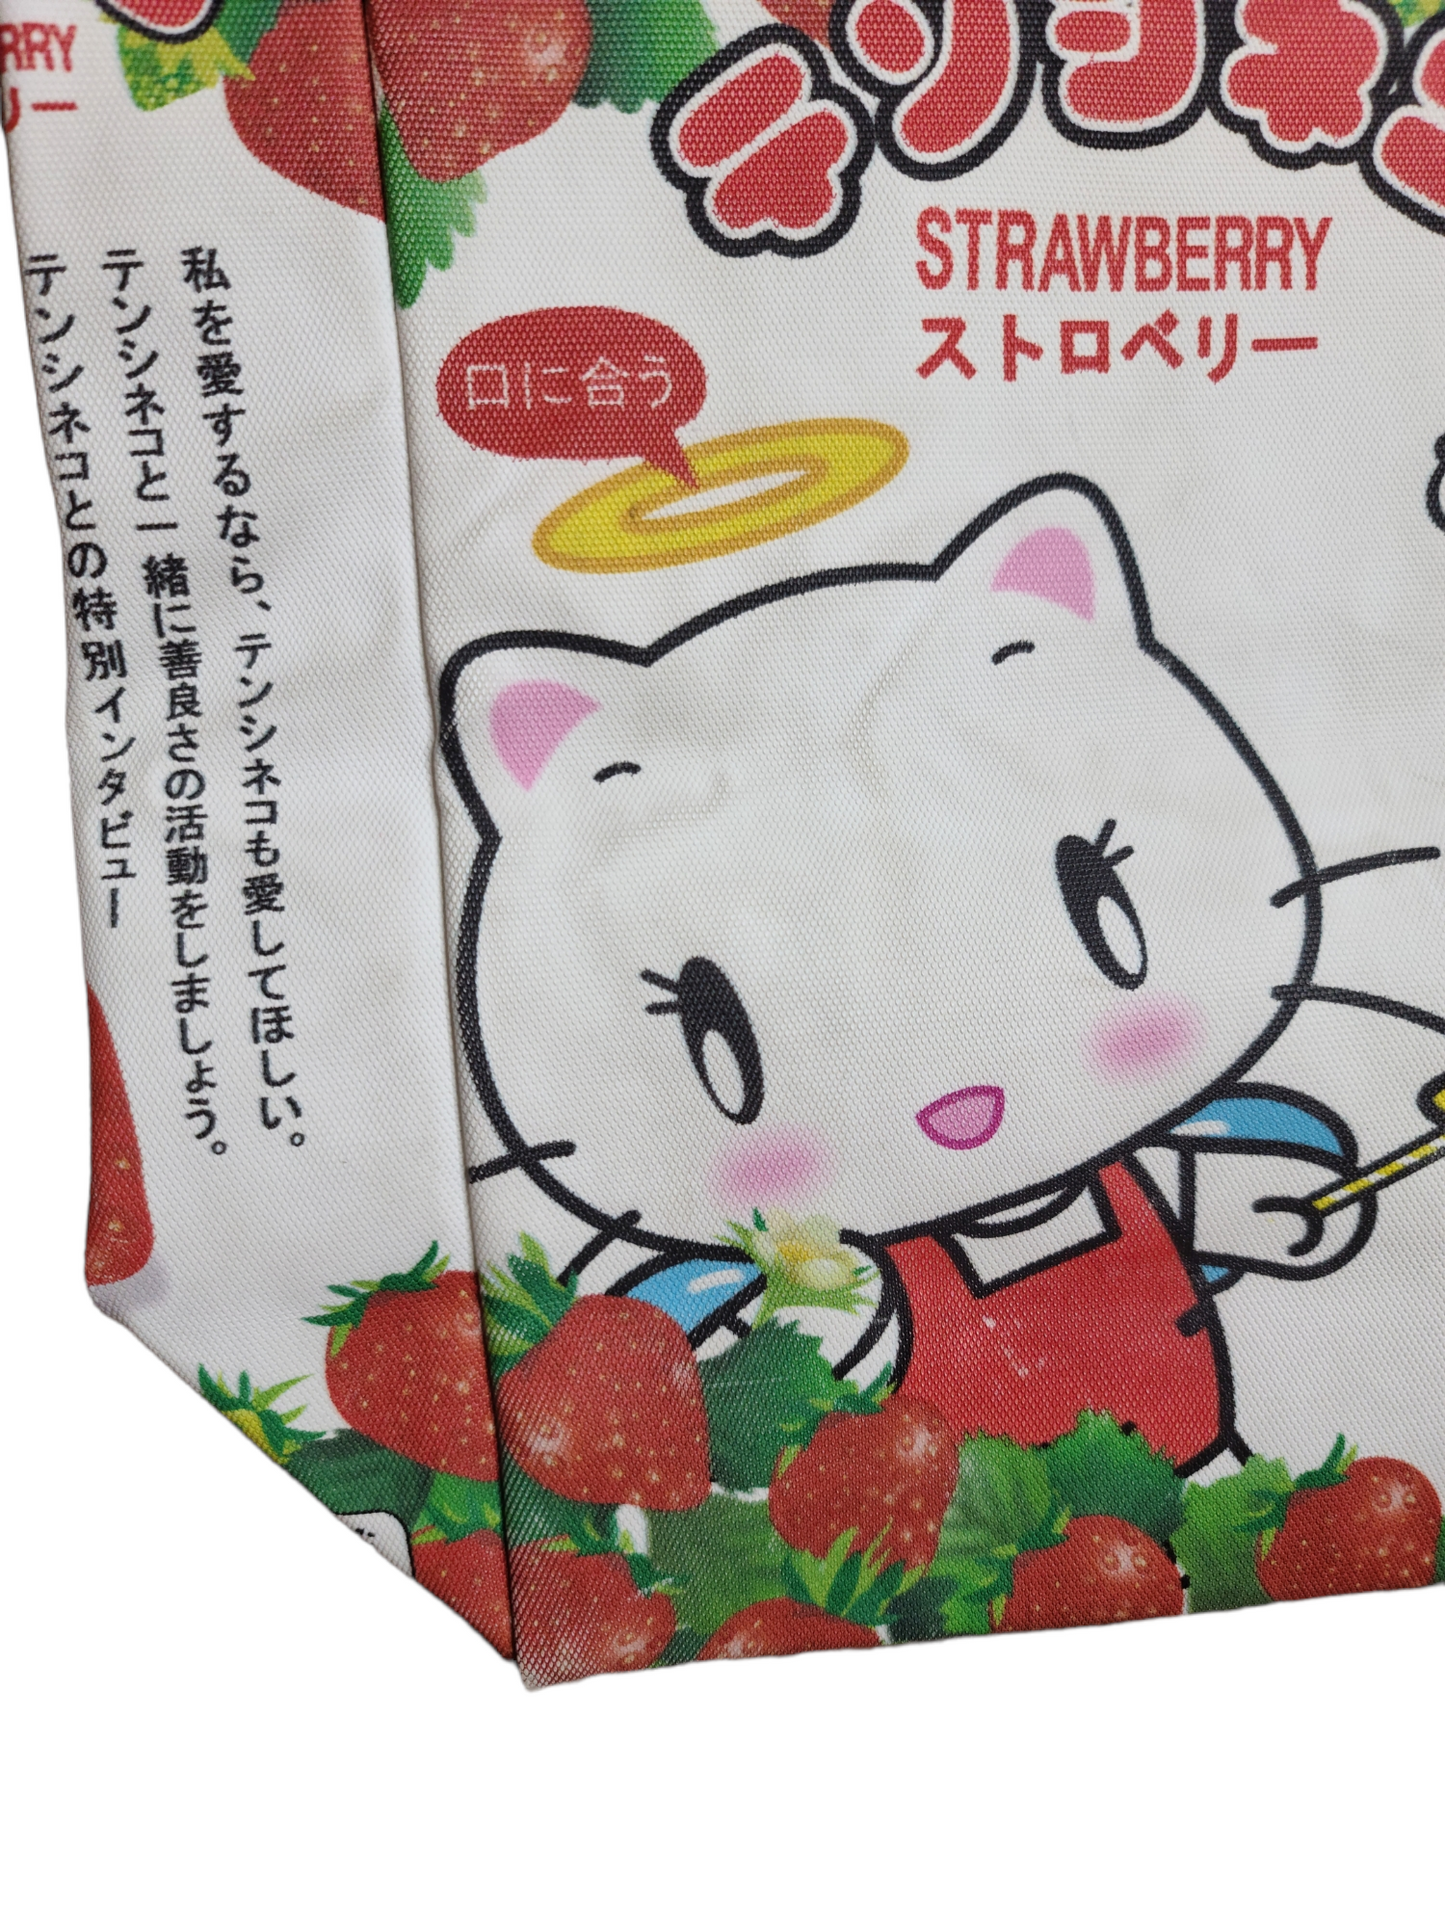 Harajuku printed bag fraises